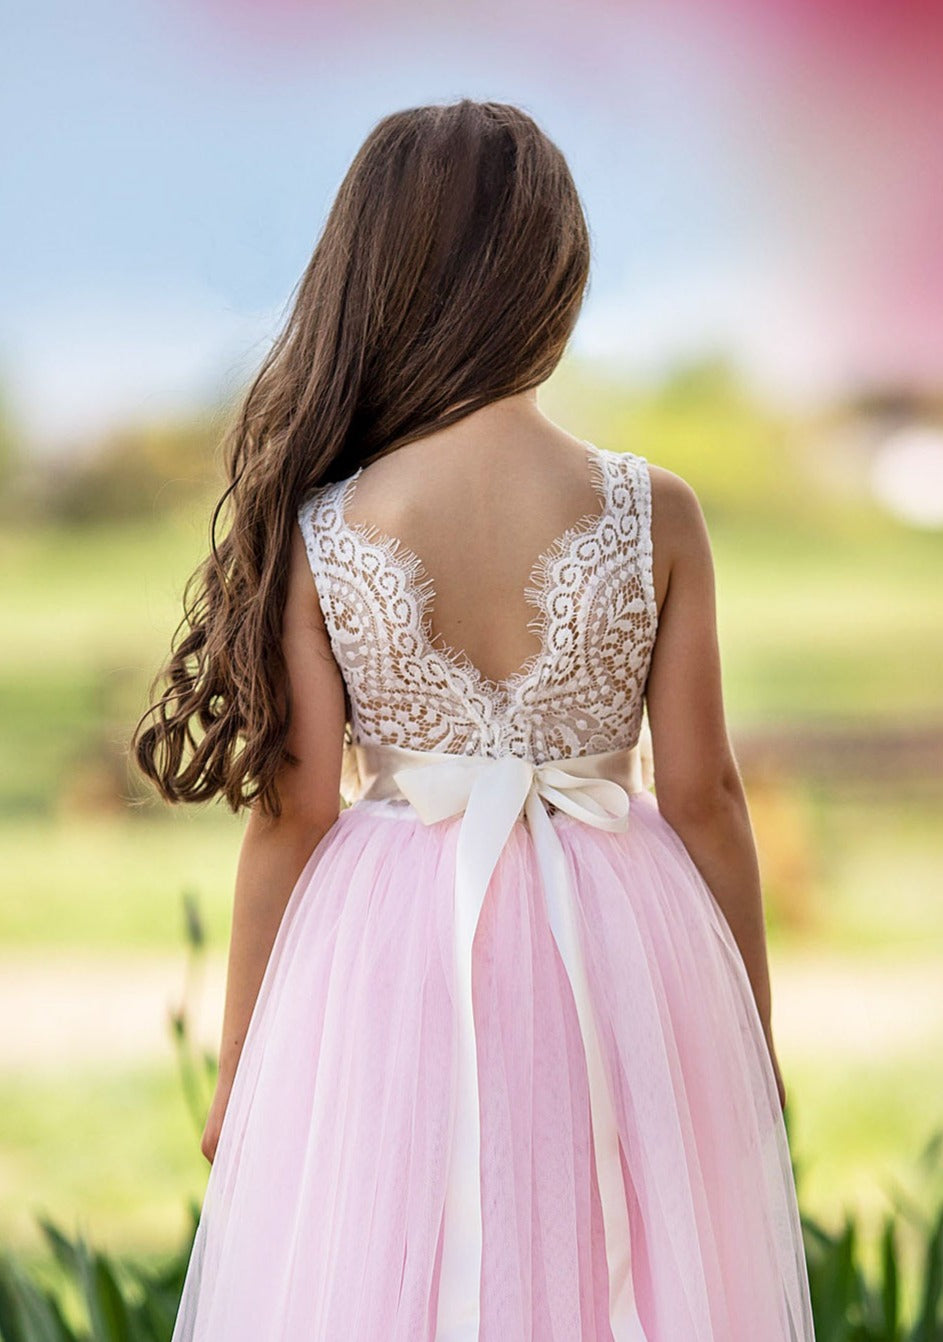 pink flower girl dress